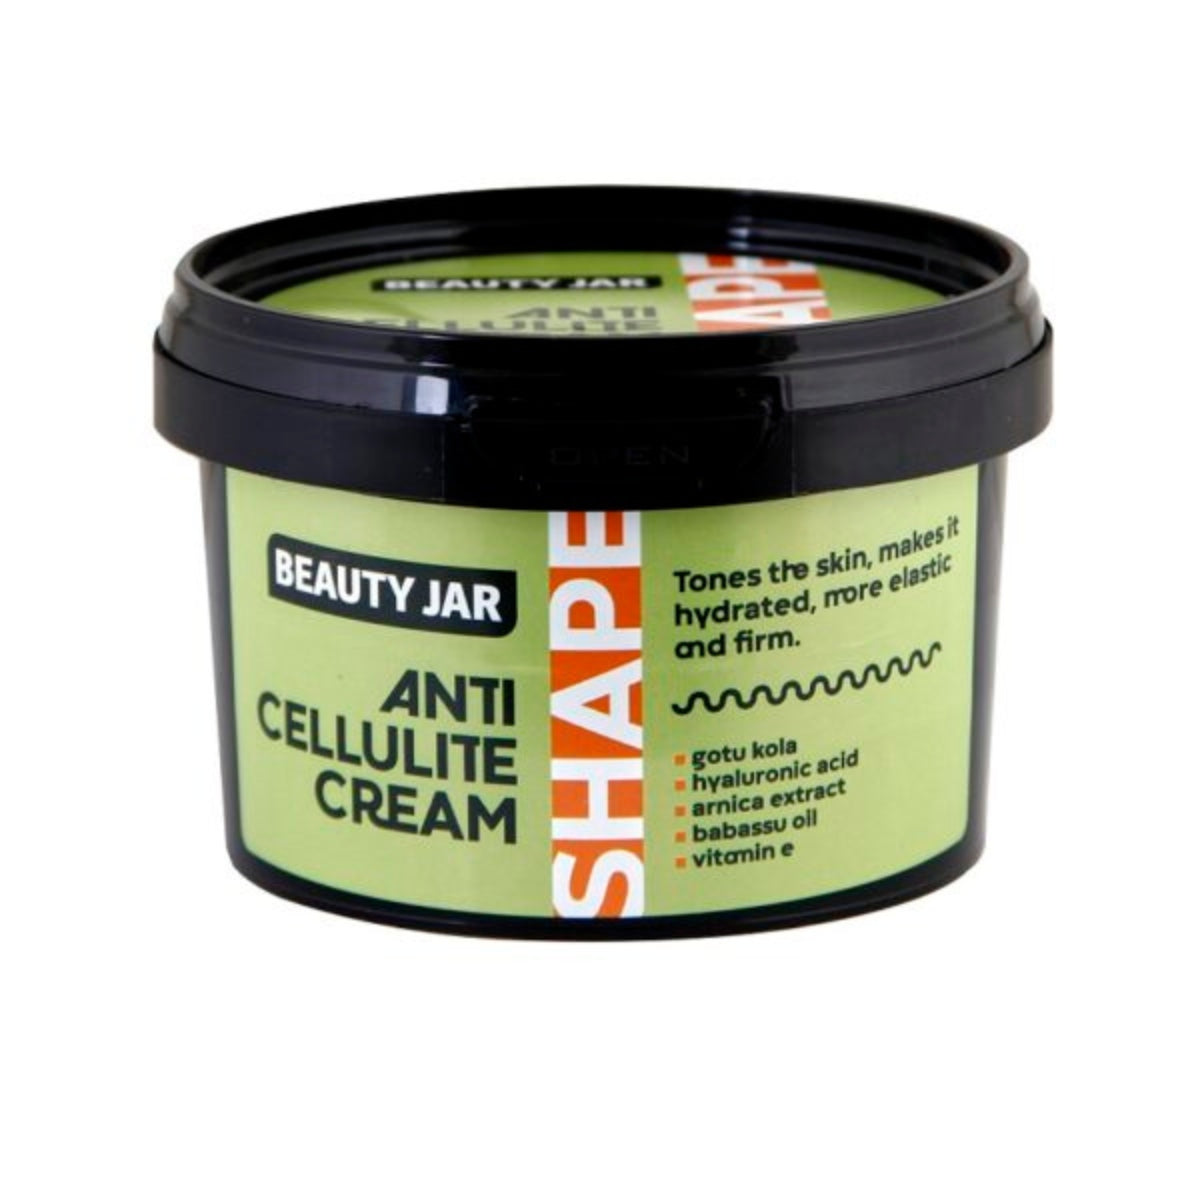 Beauty Jar SHAPE ANTI CELLULITE CREAM κρέμα κατά της κυτταρίτιδας - 380ml